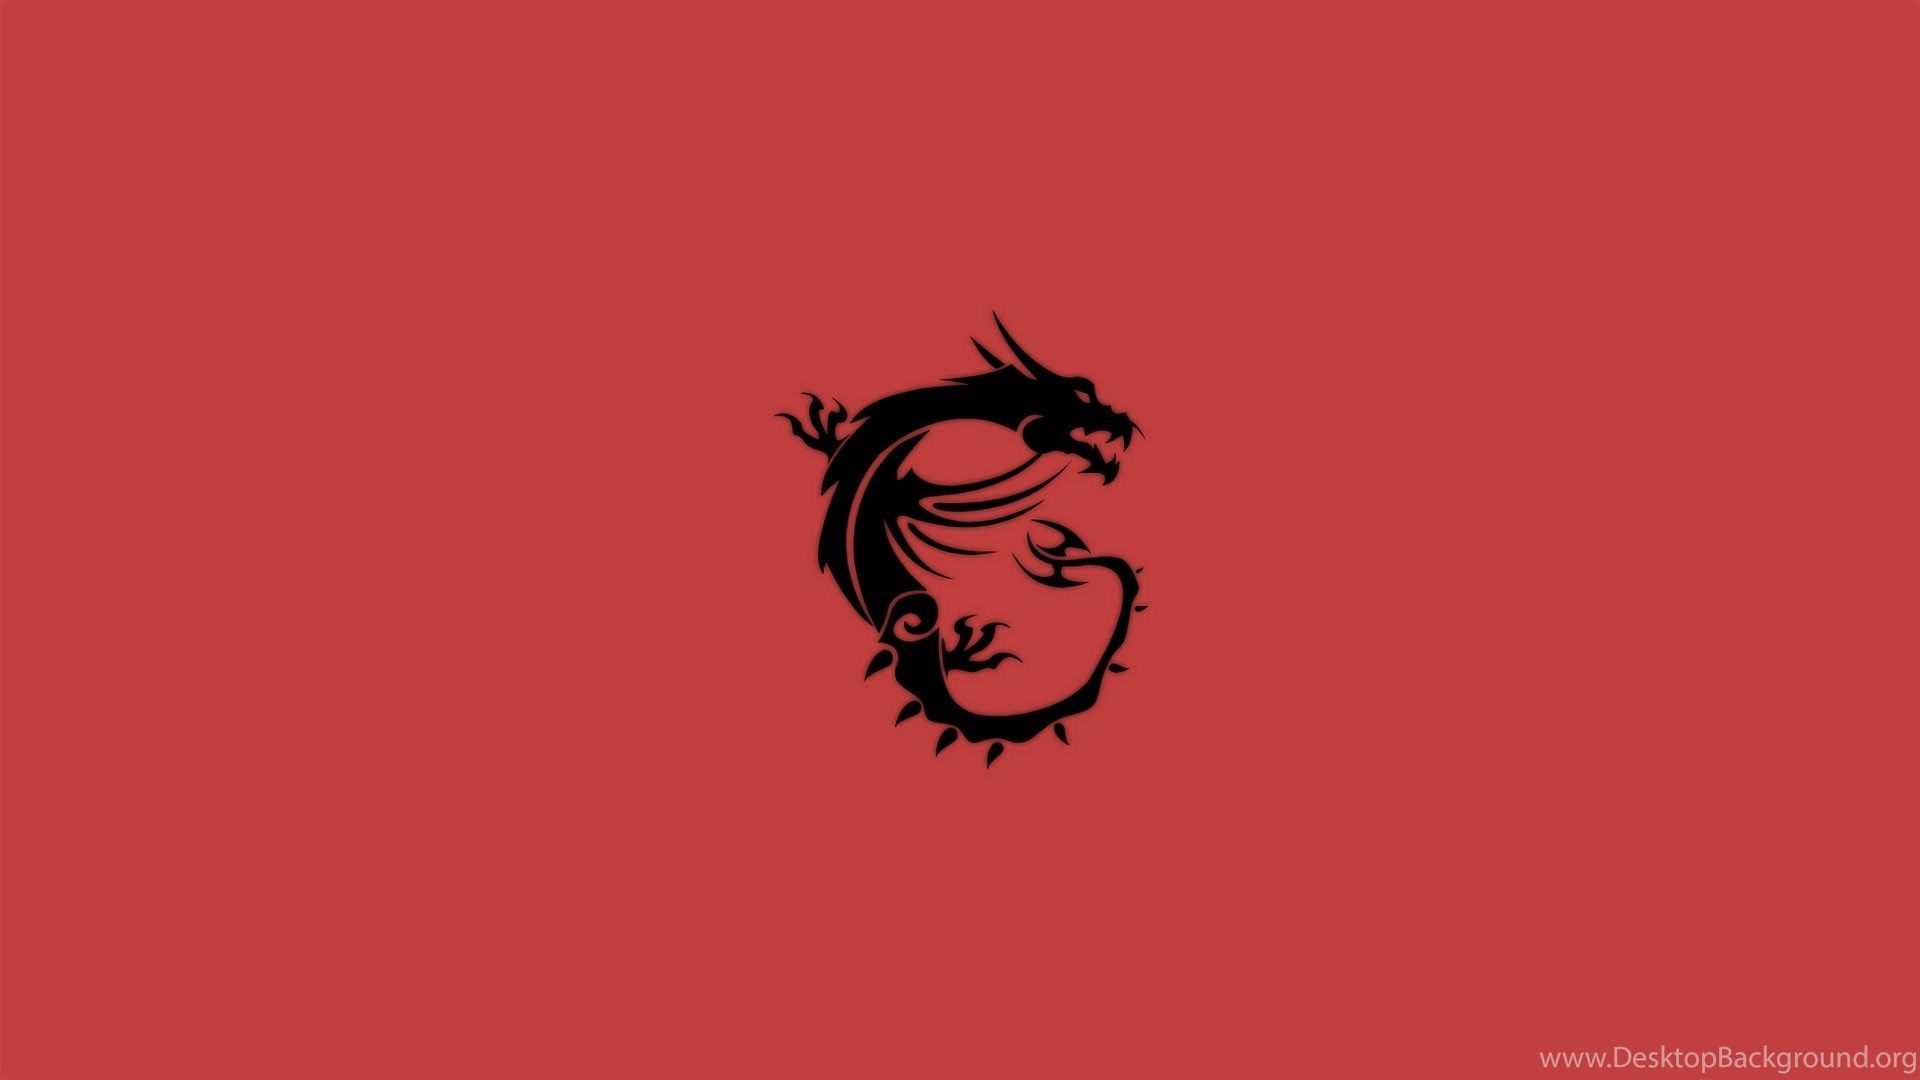 Msi Dragon Logo Wallpapers Red 4255 Desktop Background - Msi Backgrounds -  1920x1080 Wallpaper 